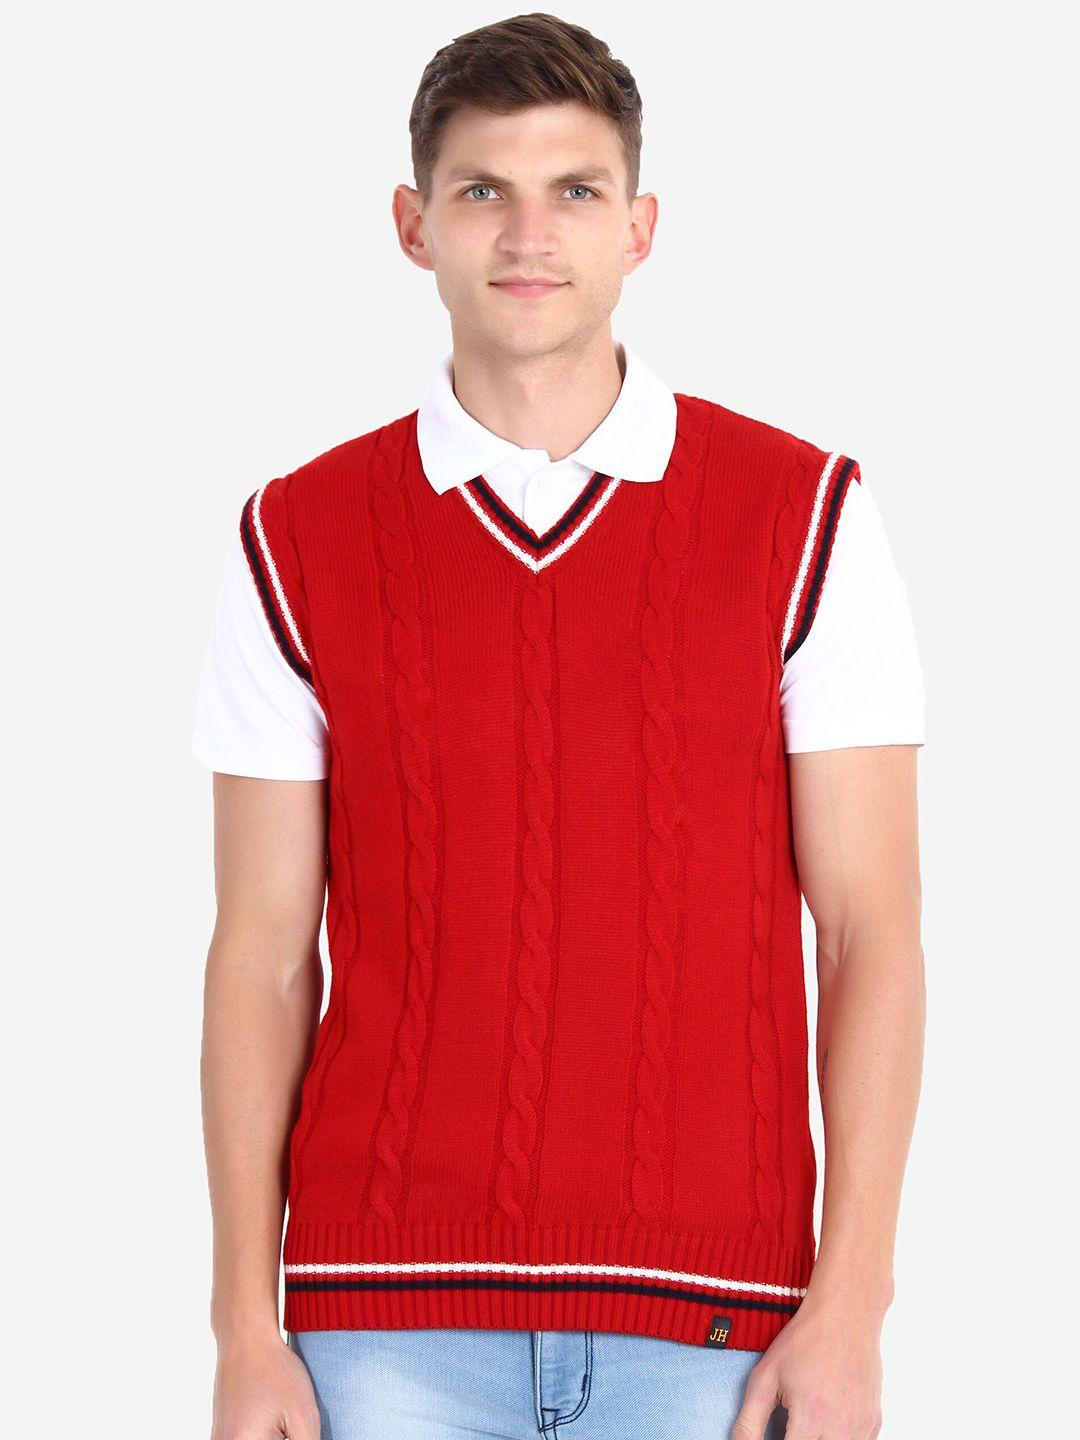 joe-hazel-men-red-acrylic-self-design-sweater-vest